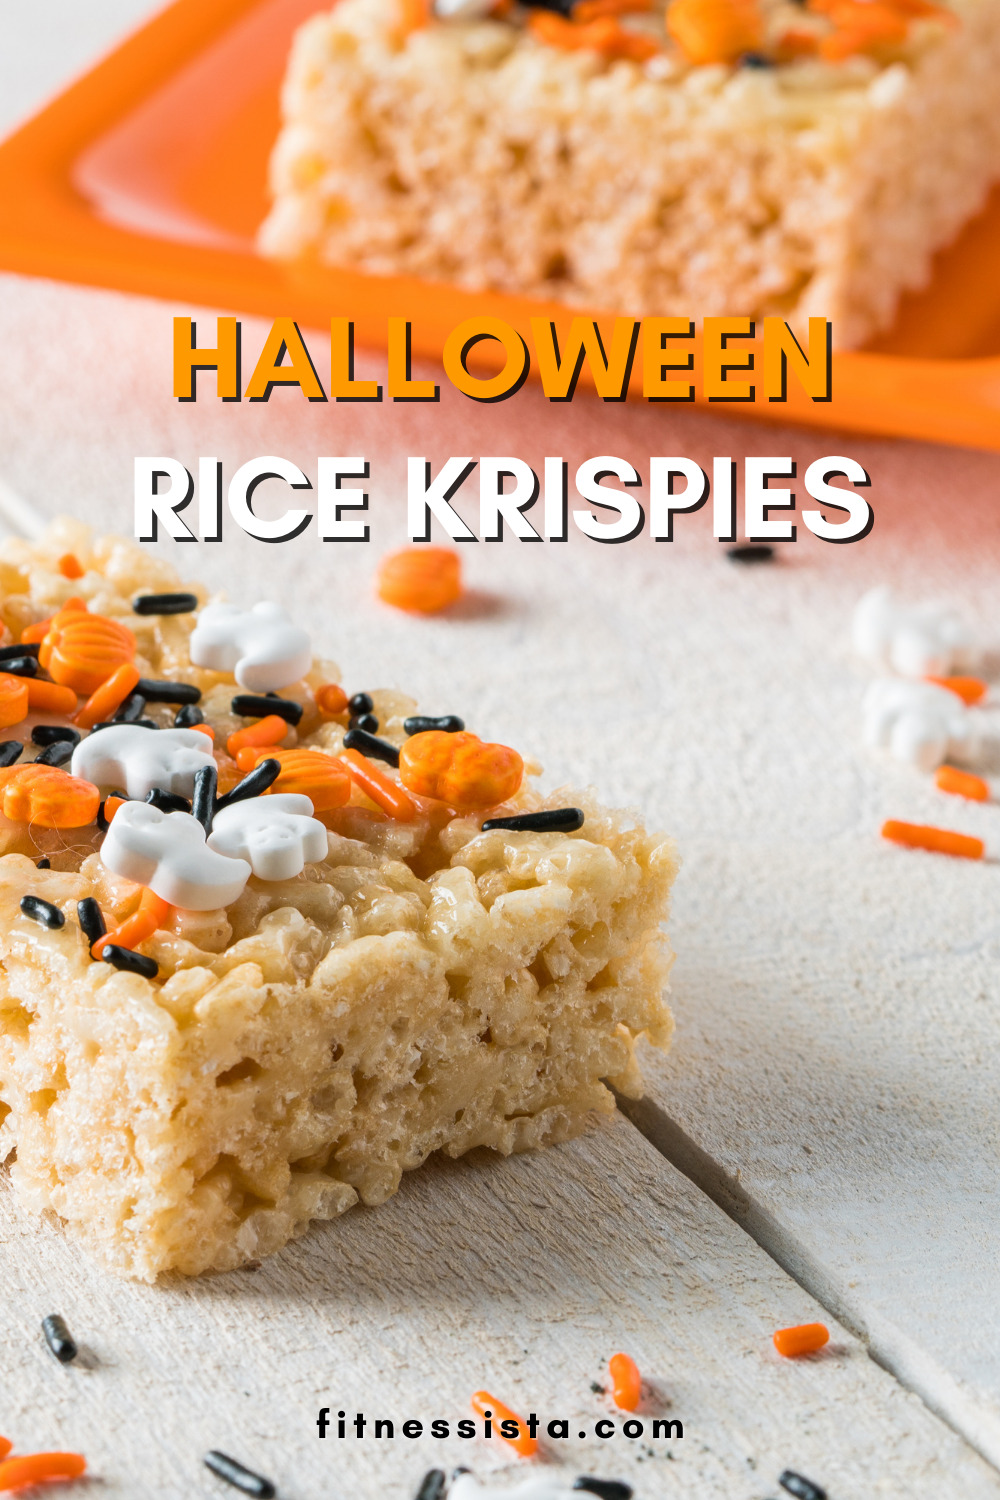 Halloween Rice Krispie Treats Recipe - The Fitnessista